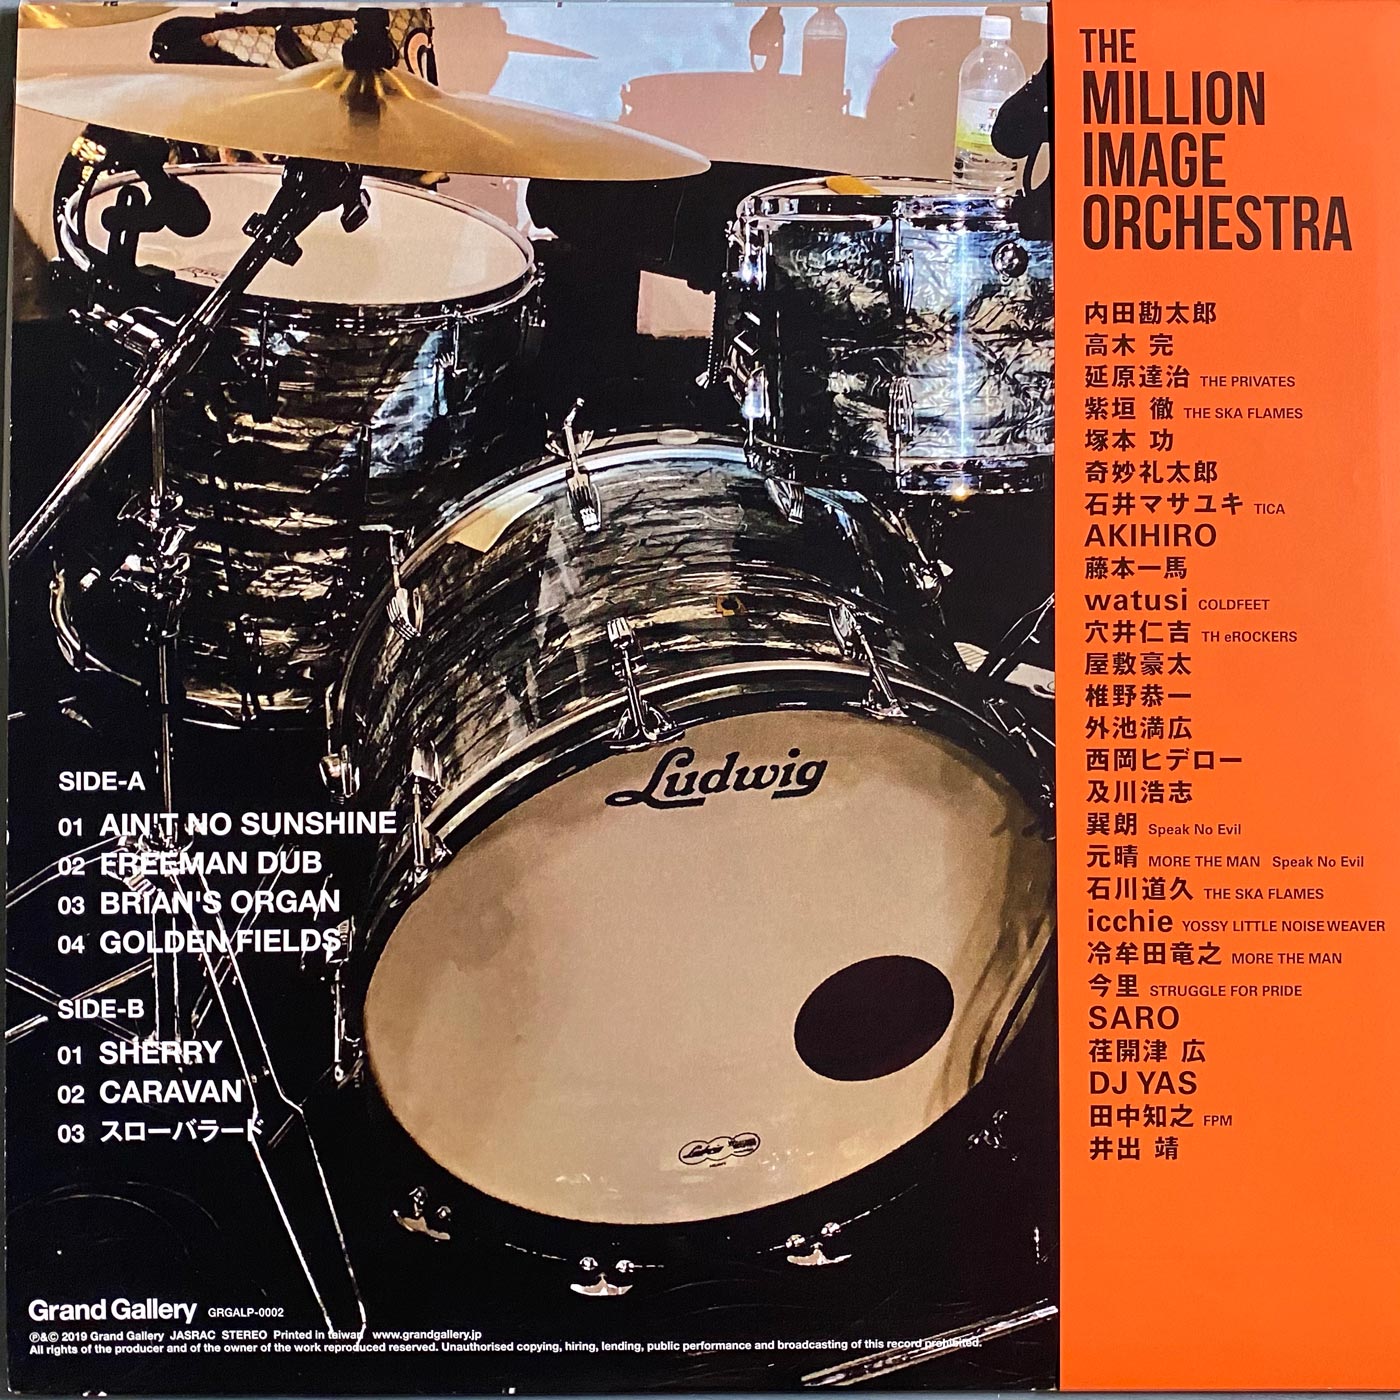 Million Image Orchestra - Live & Direct